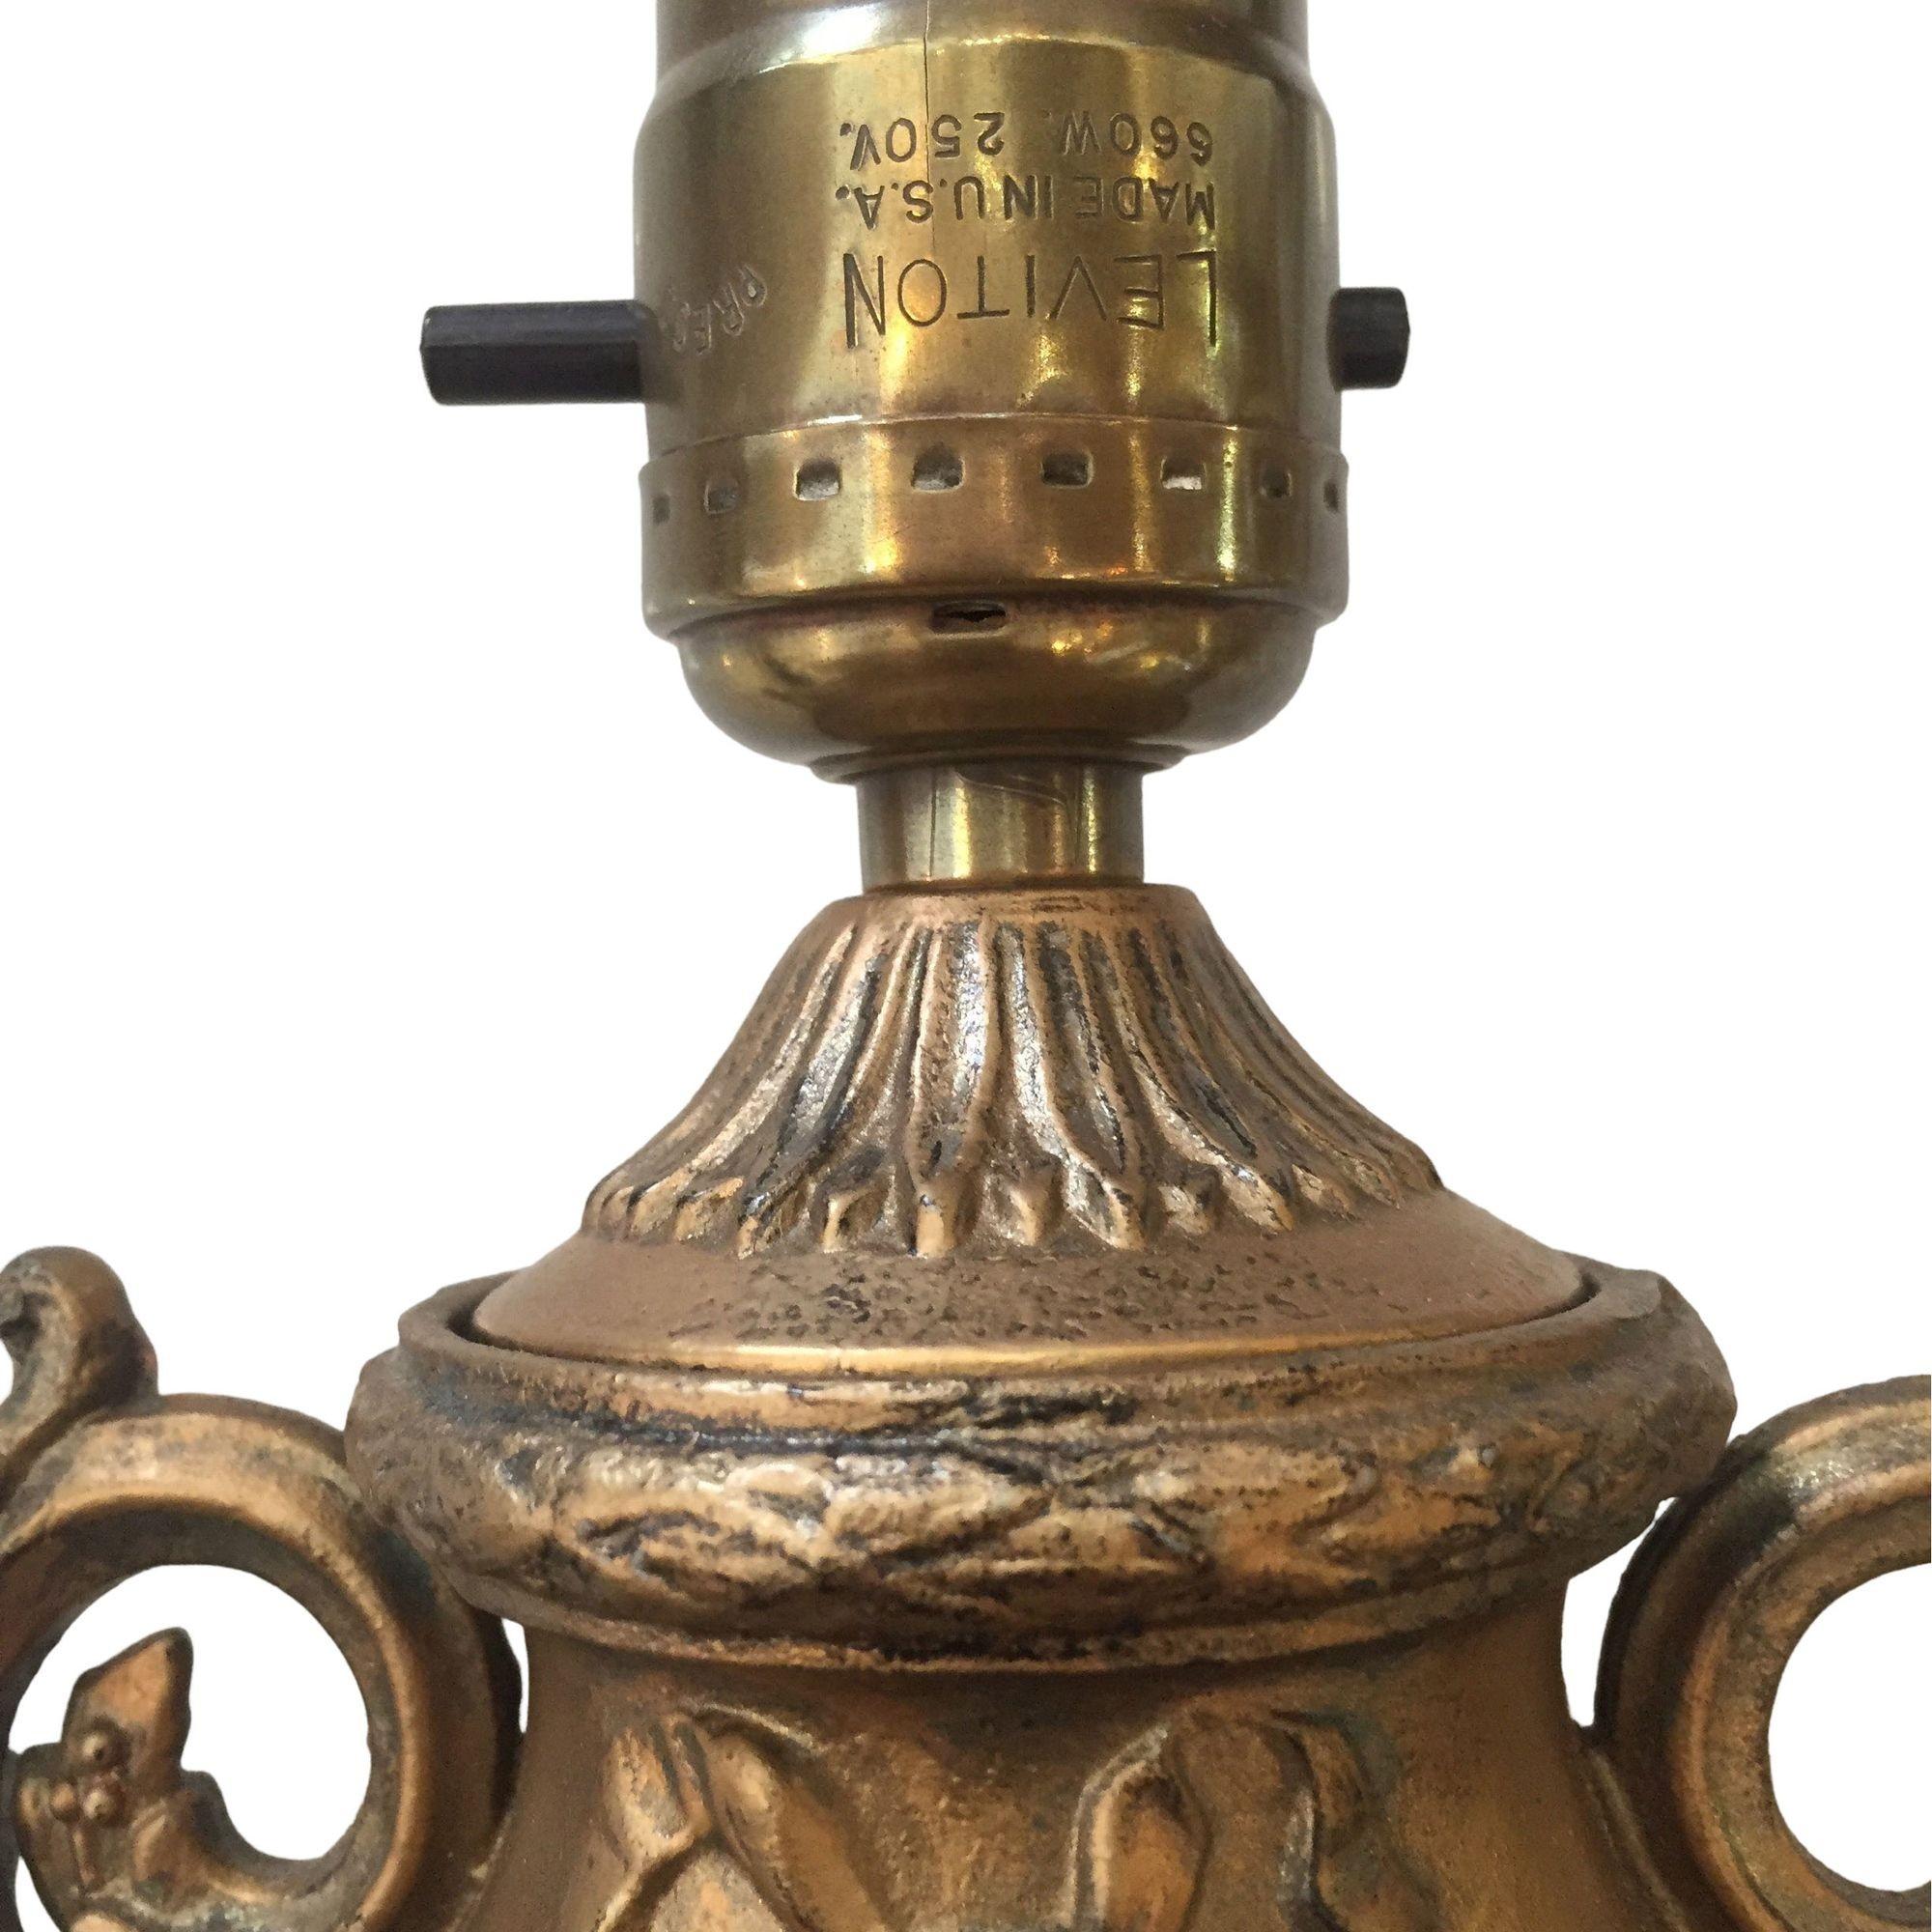 Urnenlampe im Hollywood-Regency-Stil aus goldfarbenem Gusseisen auf grünem Marmorsockel.

Maße: 13